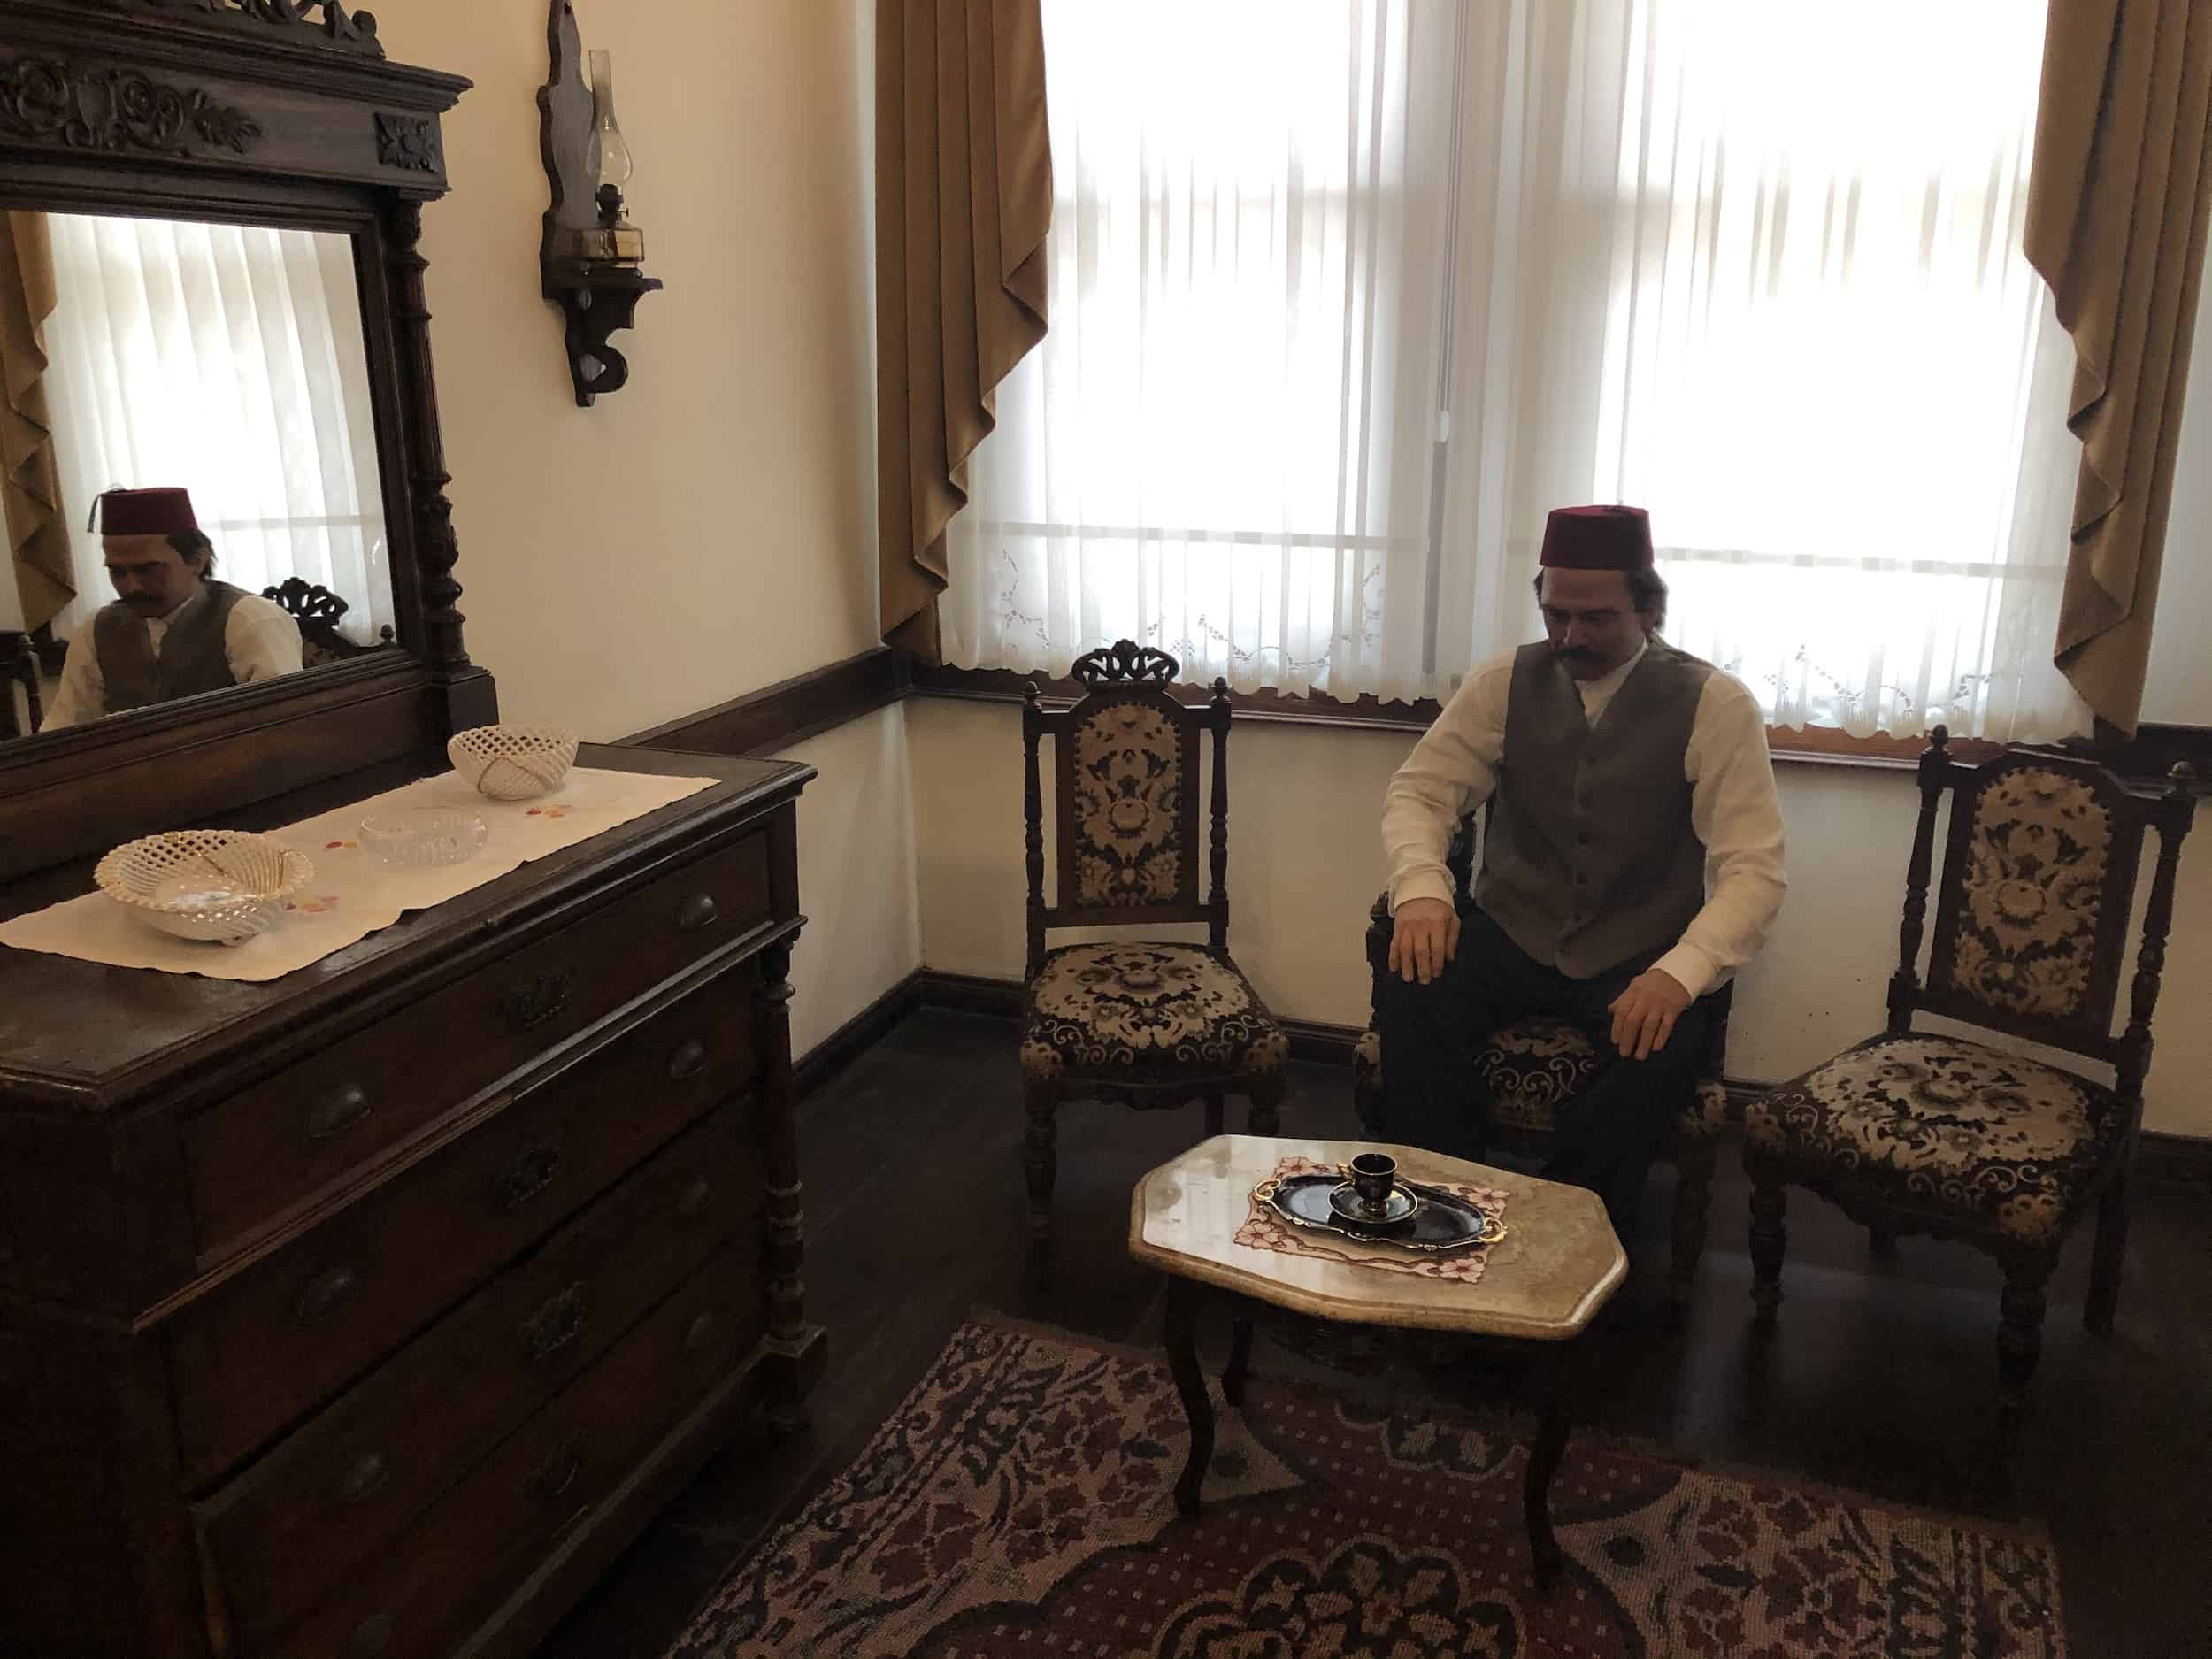 Sitting room at the Bursa Life Culture Museum